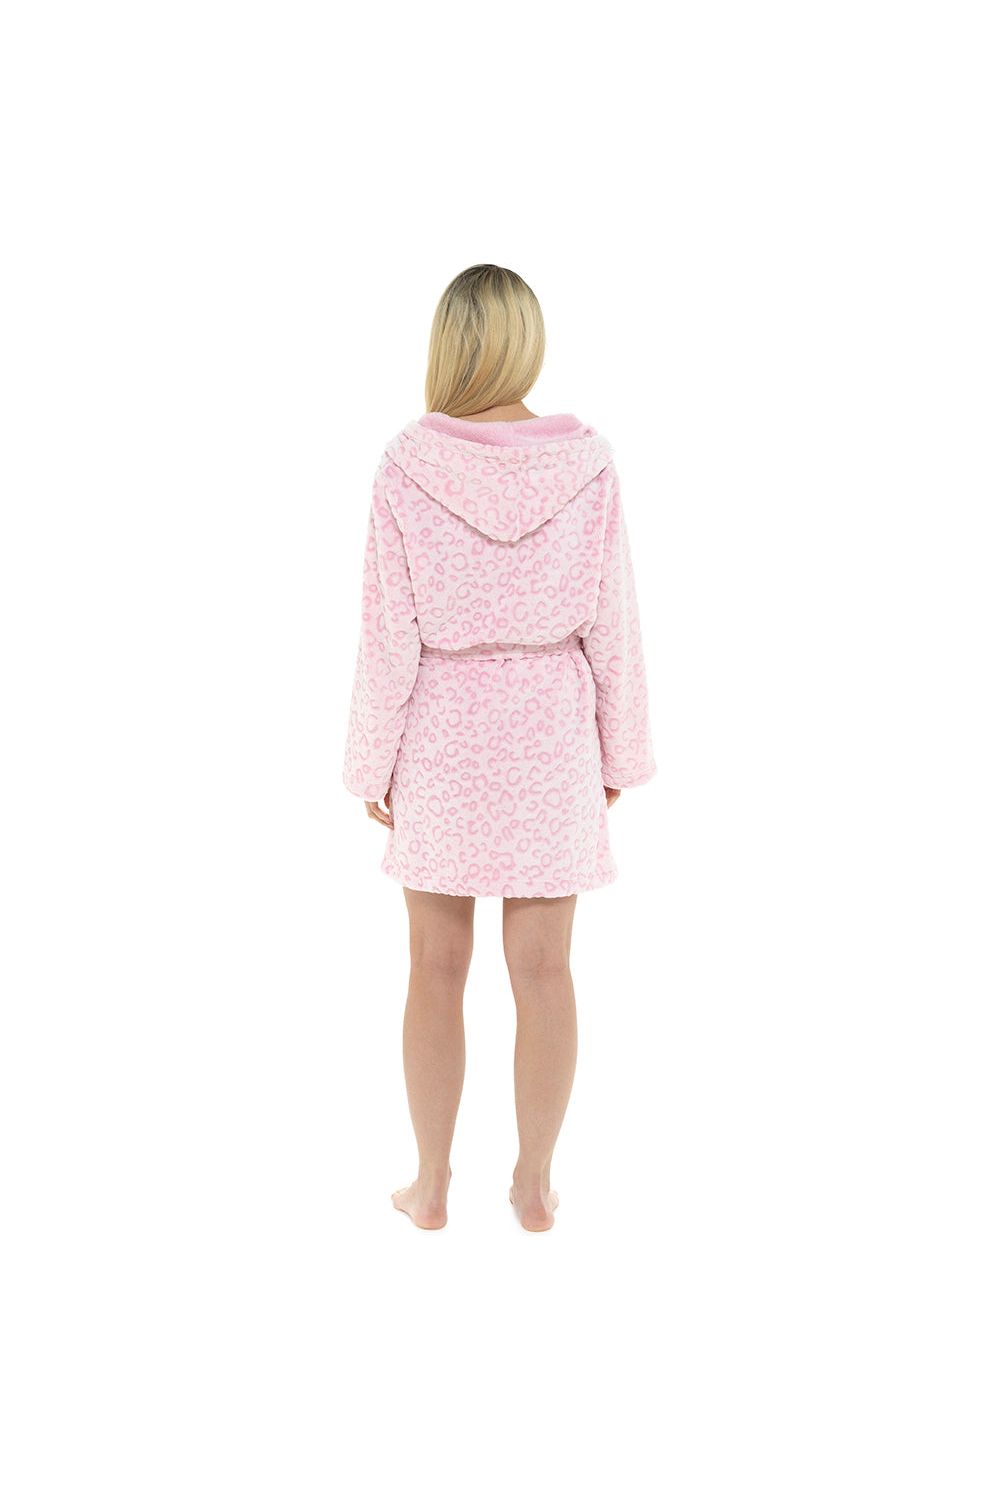 Ladies Leopard Hooded Design Fleece Nightwear Bathrobe Dressing Gown - Pyjamas.com